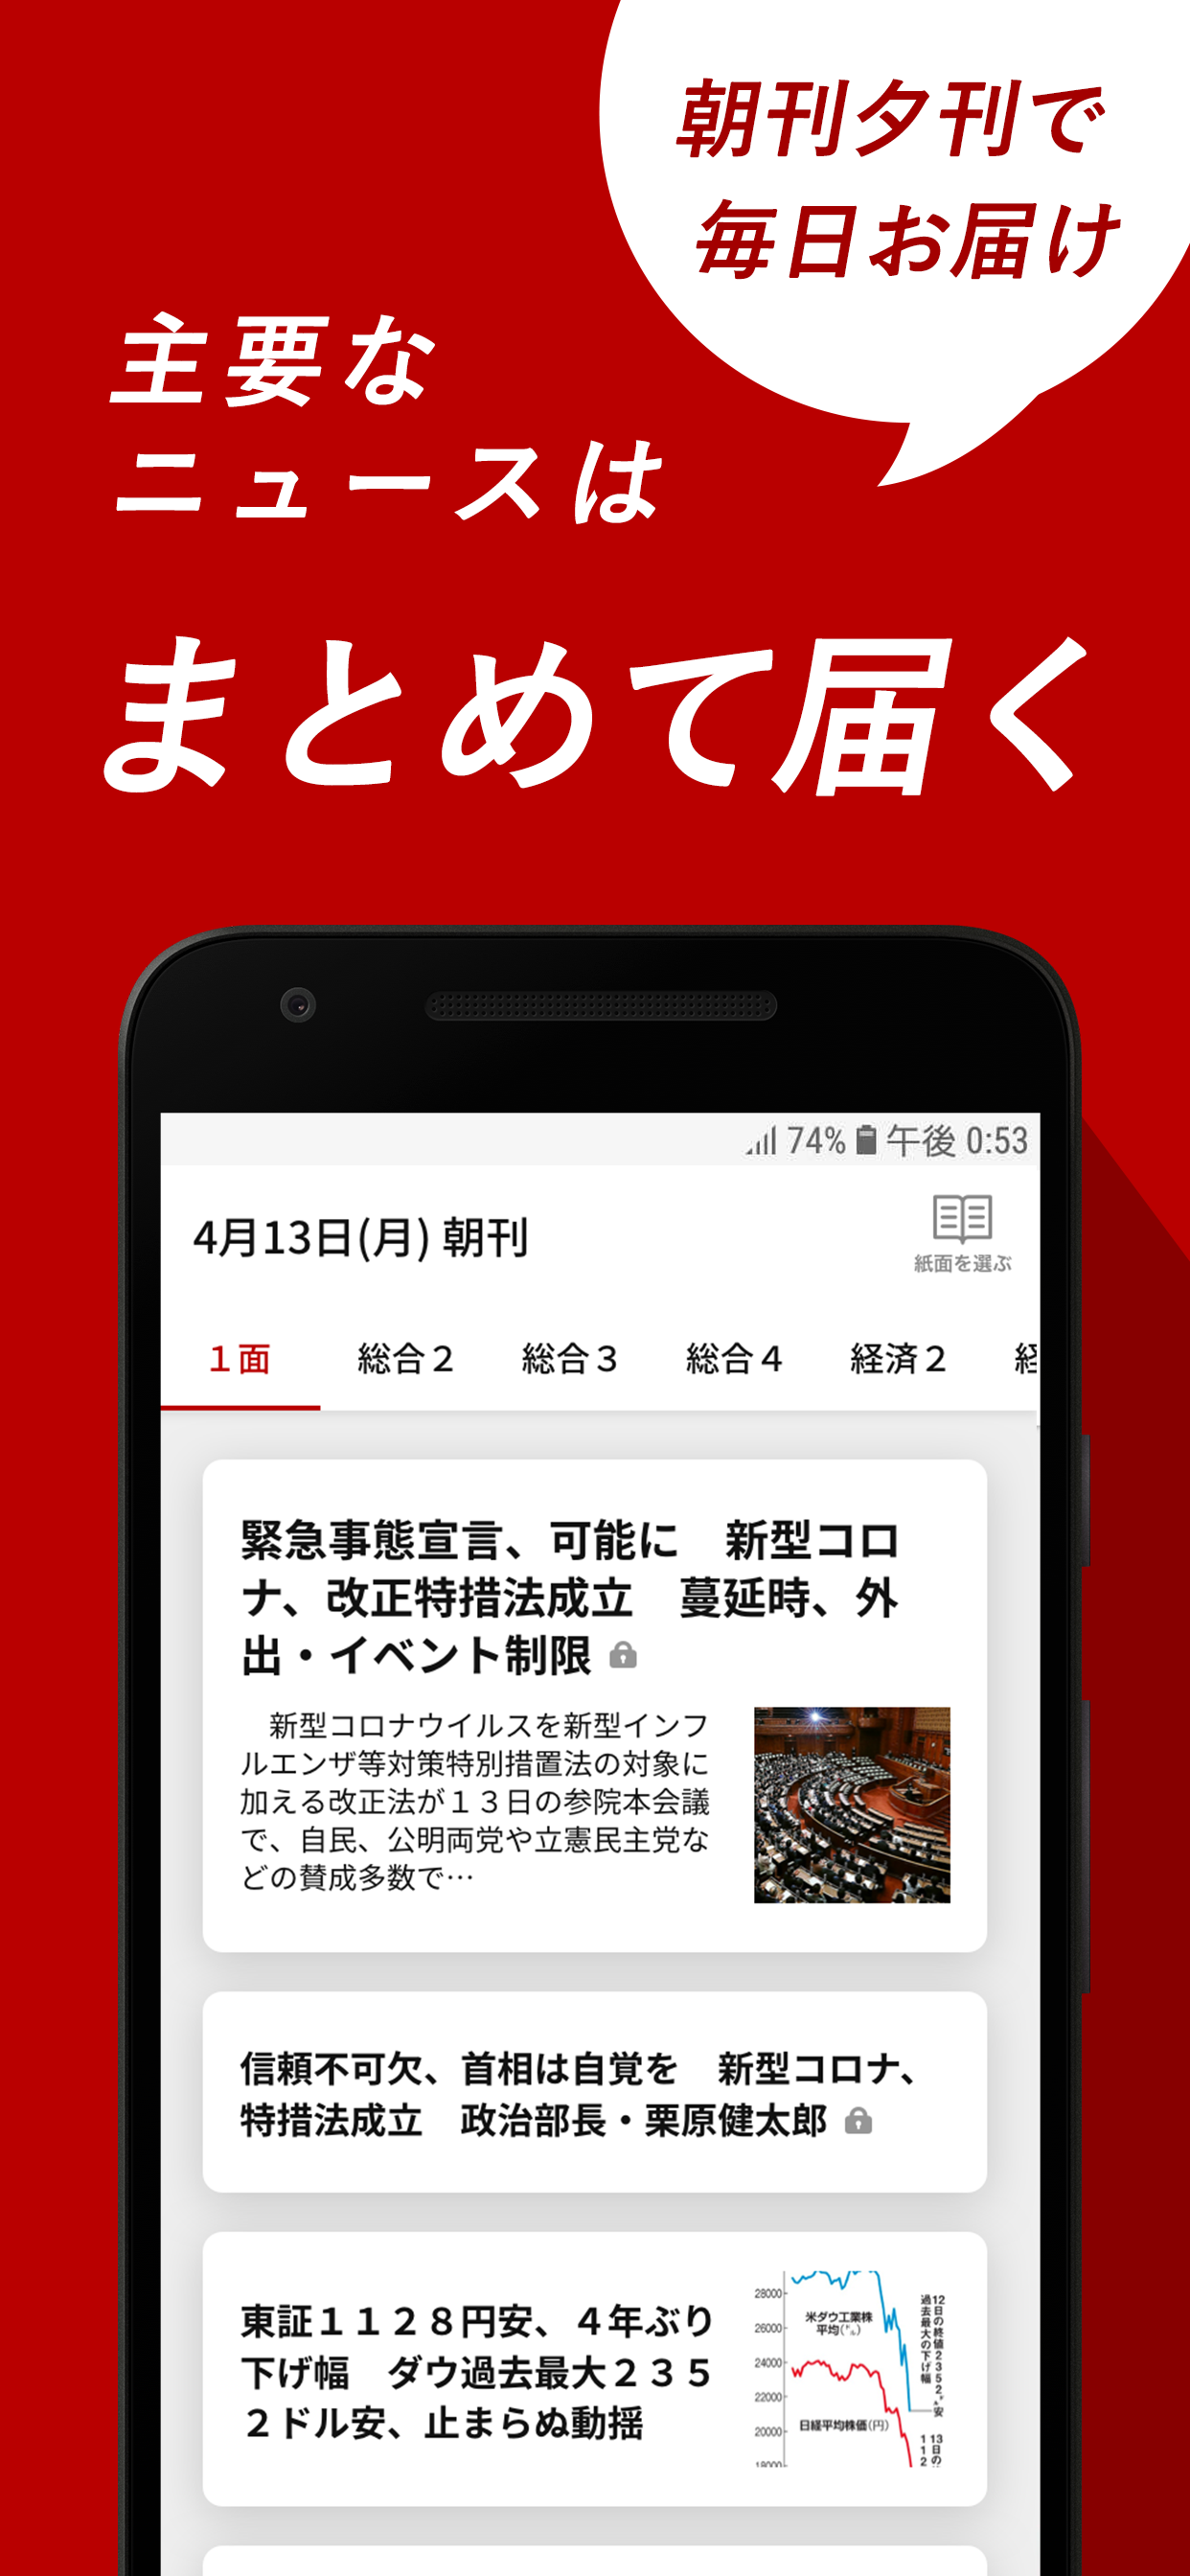 Android application 朝日新聞デジタル - 最新ニュースを深掘り！ screenshort